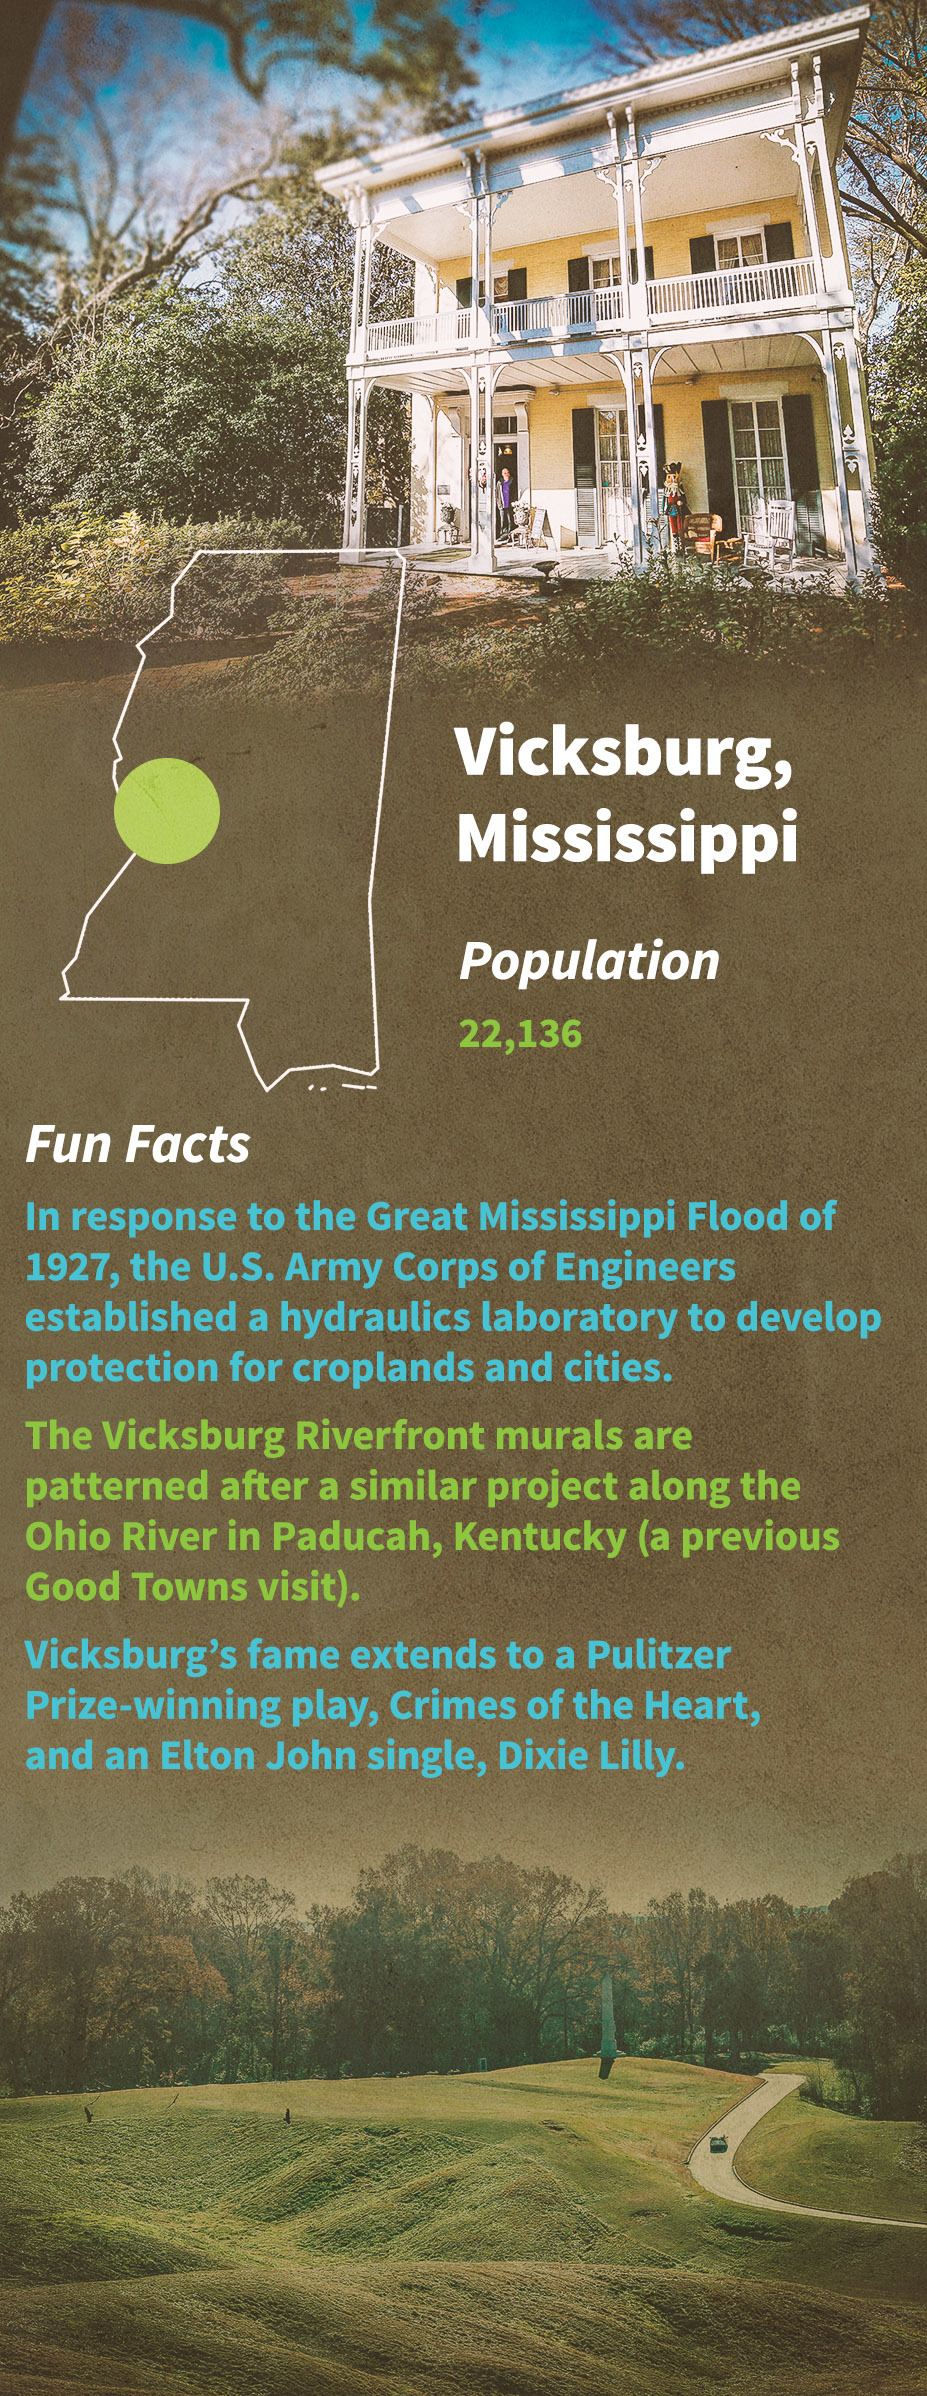 Vicksburg Fun Facts